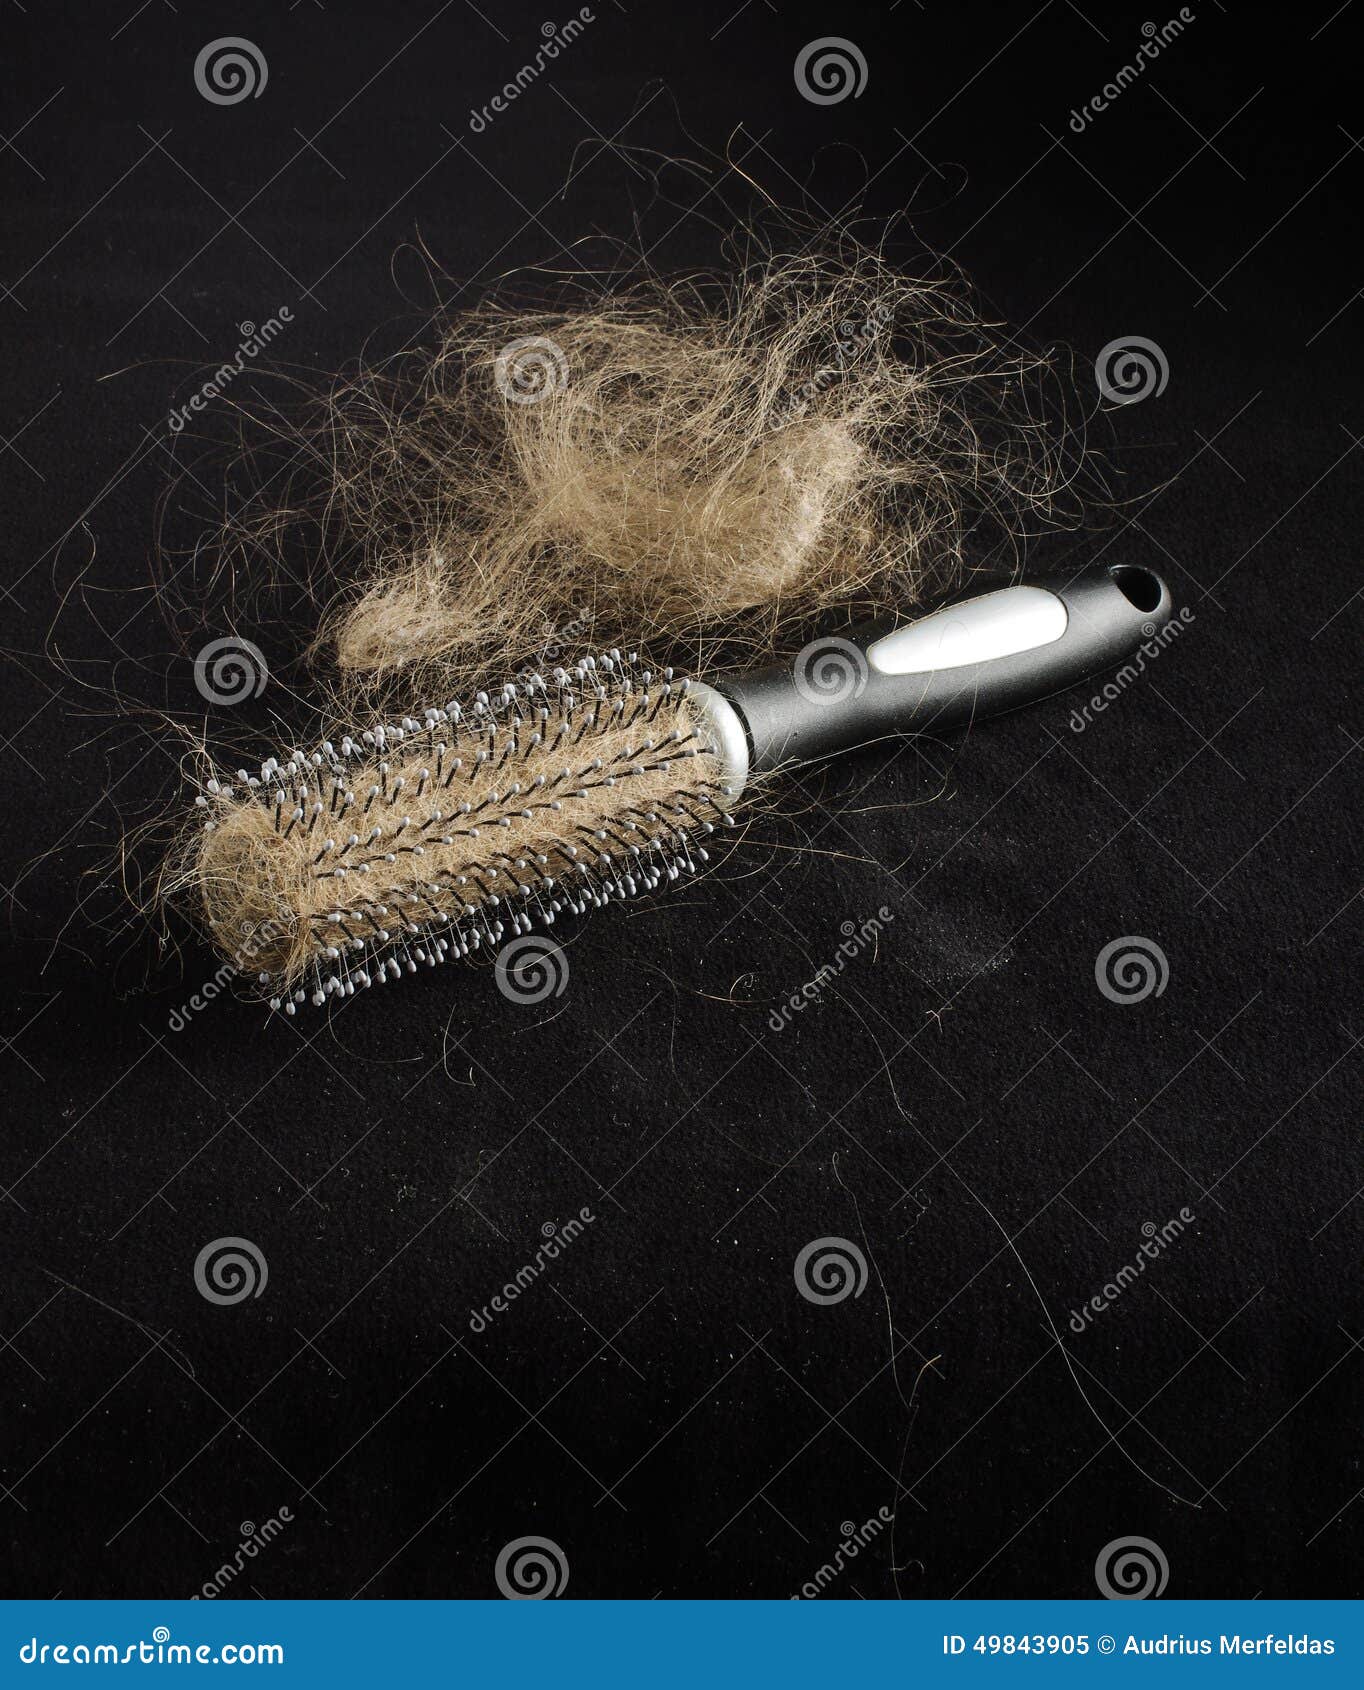 Alopecia Concept Hairbrush Full of Loss Hair Stock Image - Image of brush,  care: 49843905